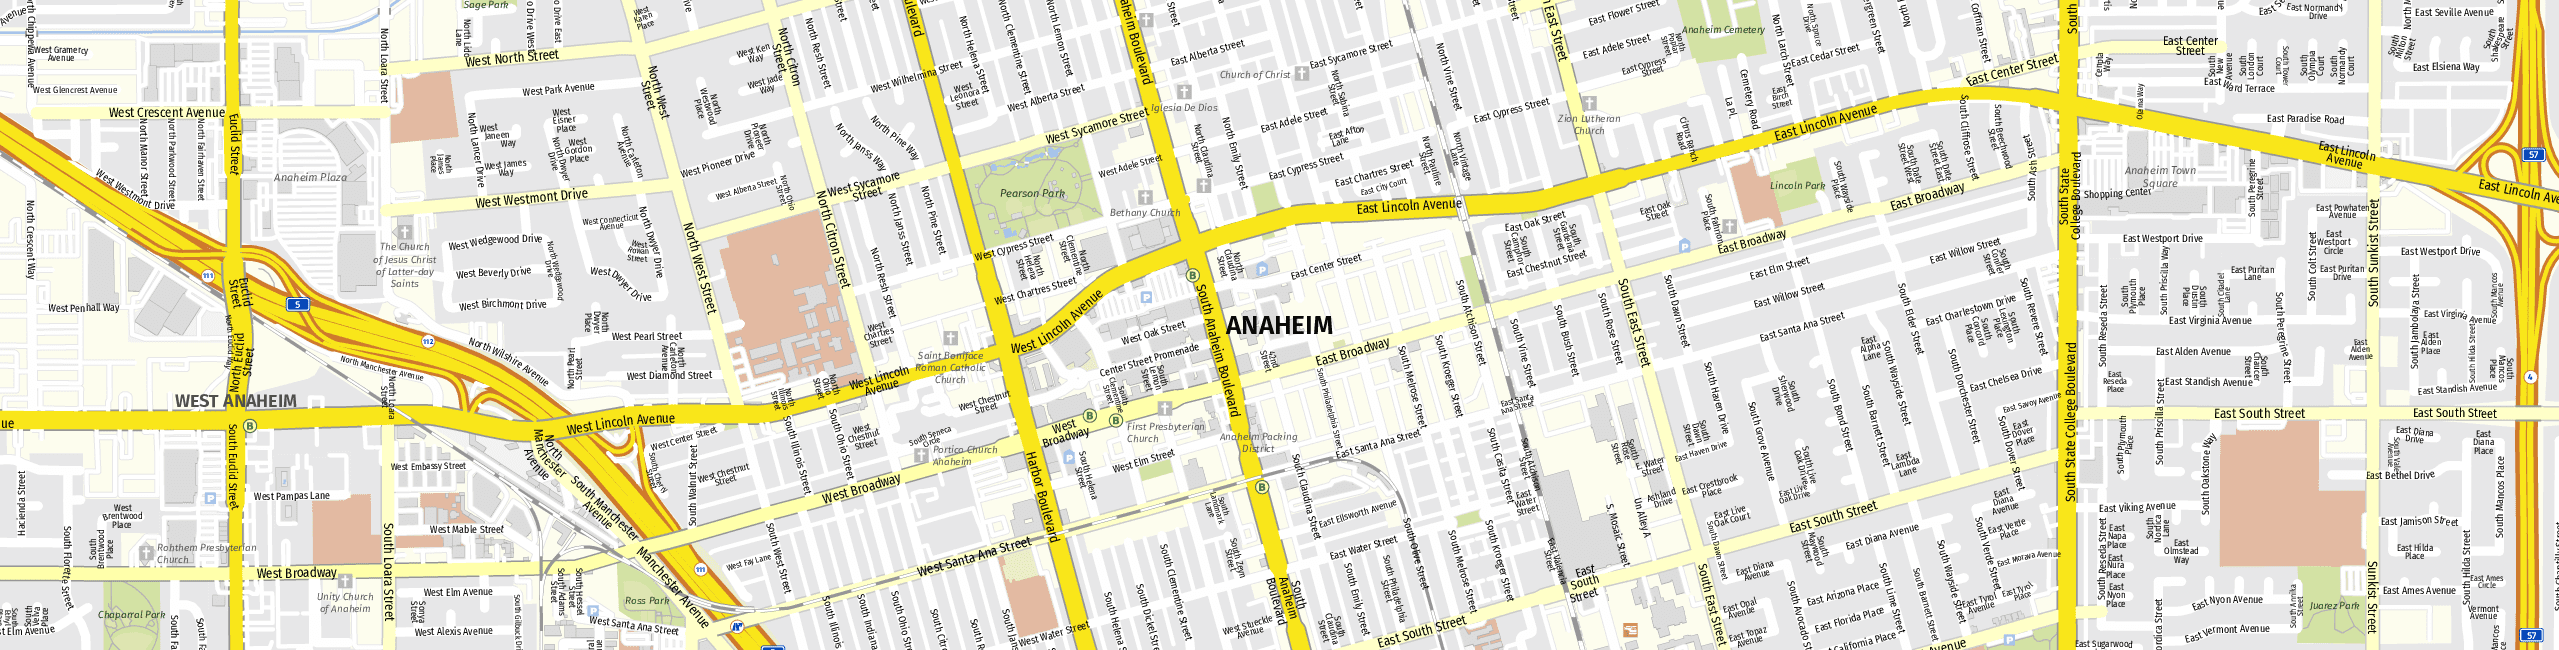 Stadtplan Anaheim zum Downloaden.